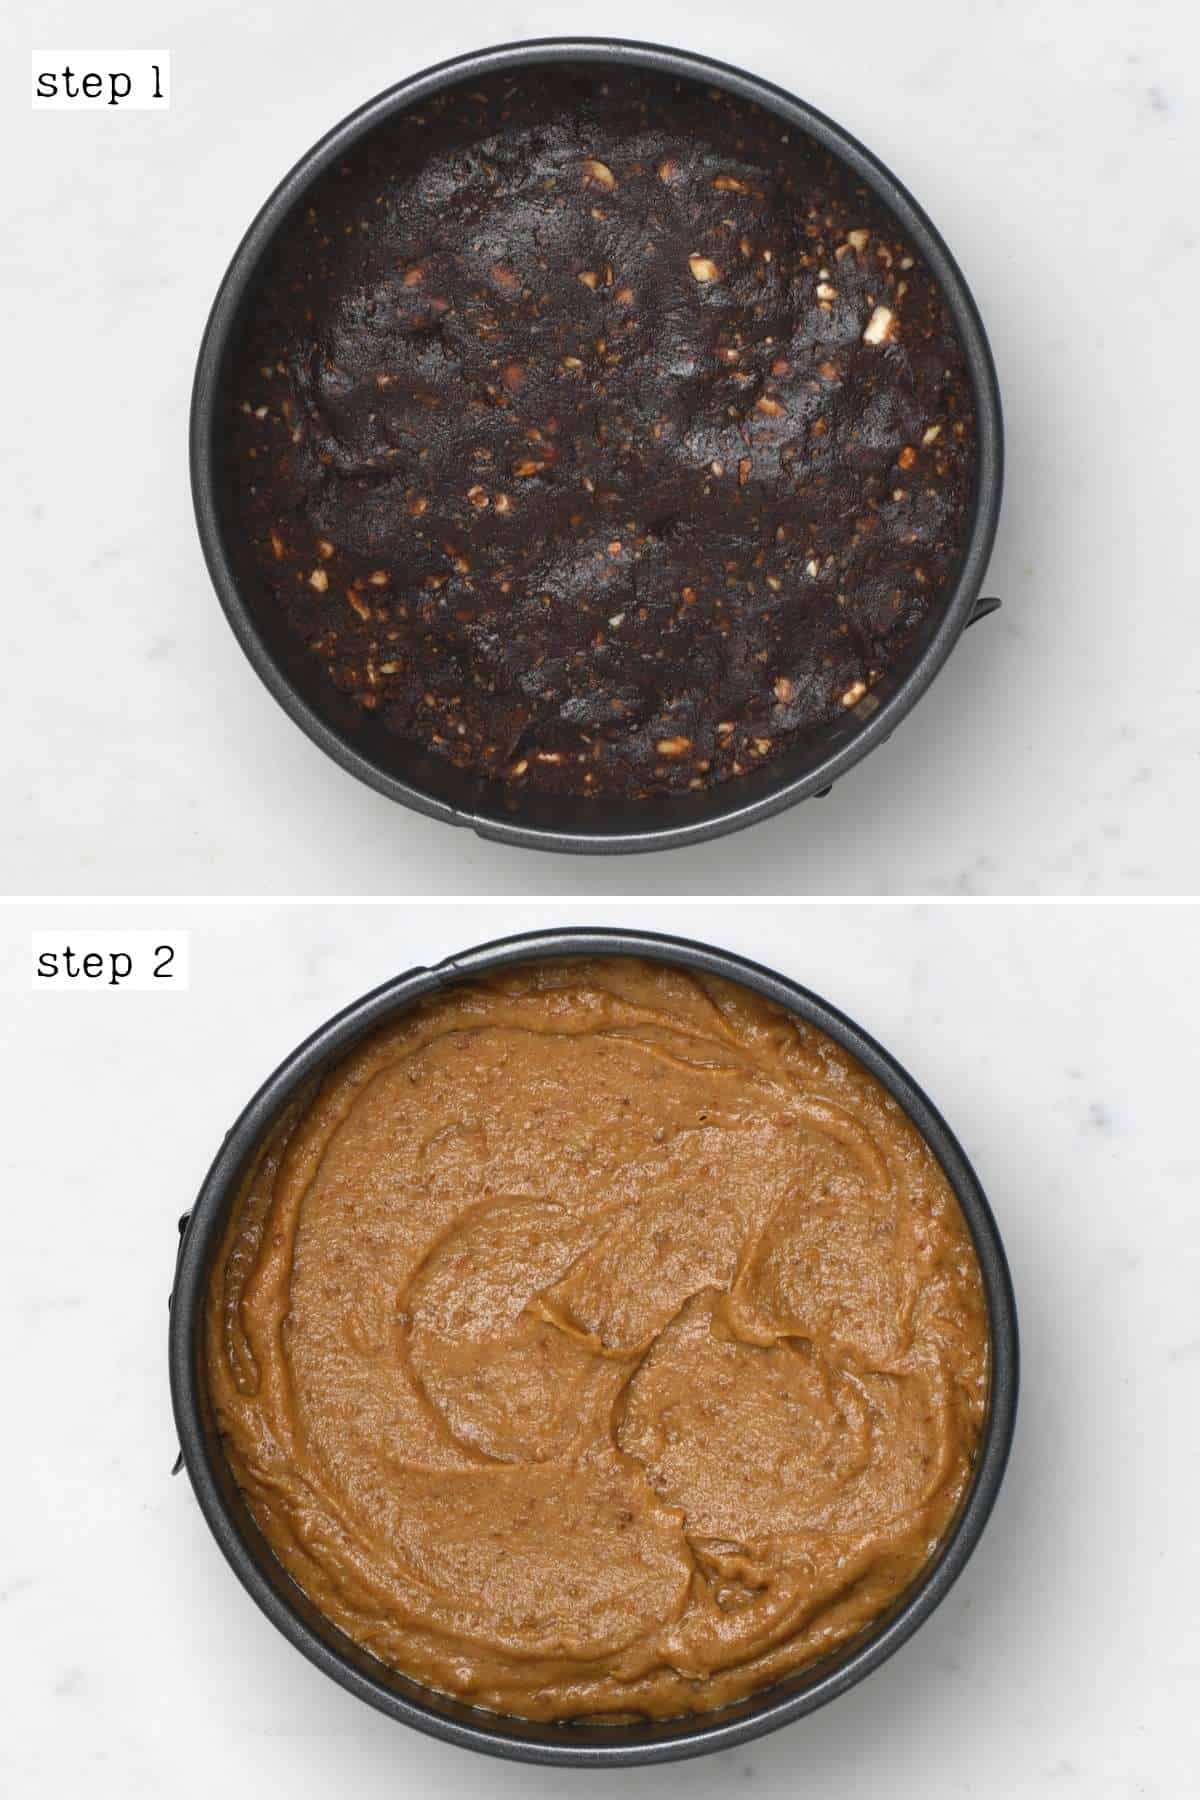 Steps for making a Mars cake